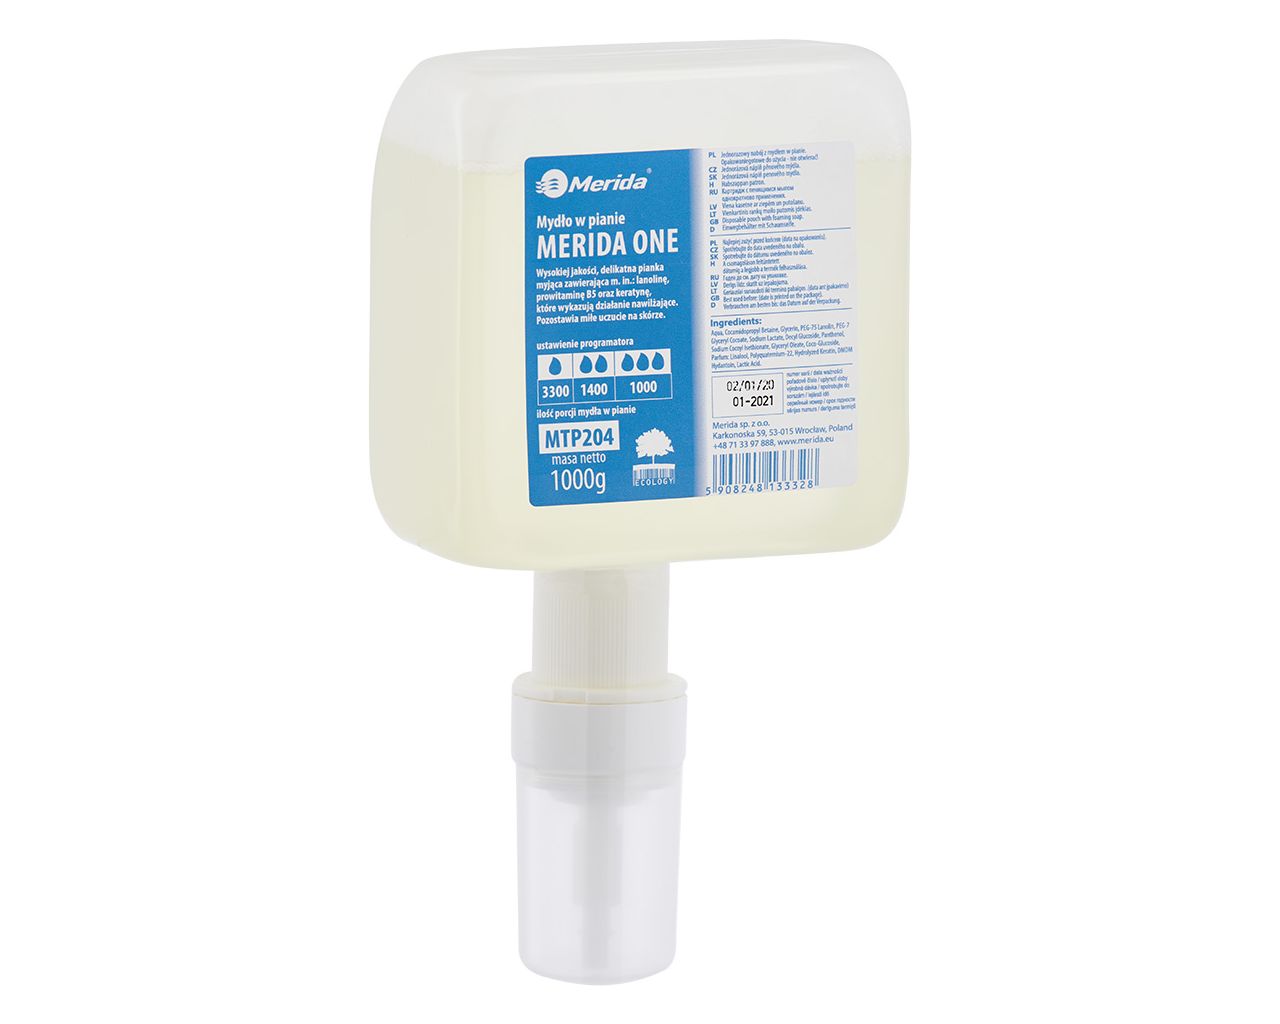 MERIDA ONE - foam soap, disposable cartridge with foaming pump 1000 g